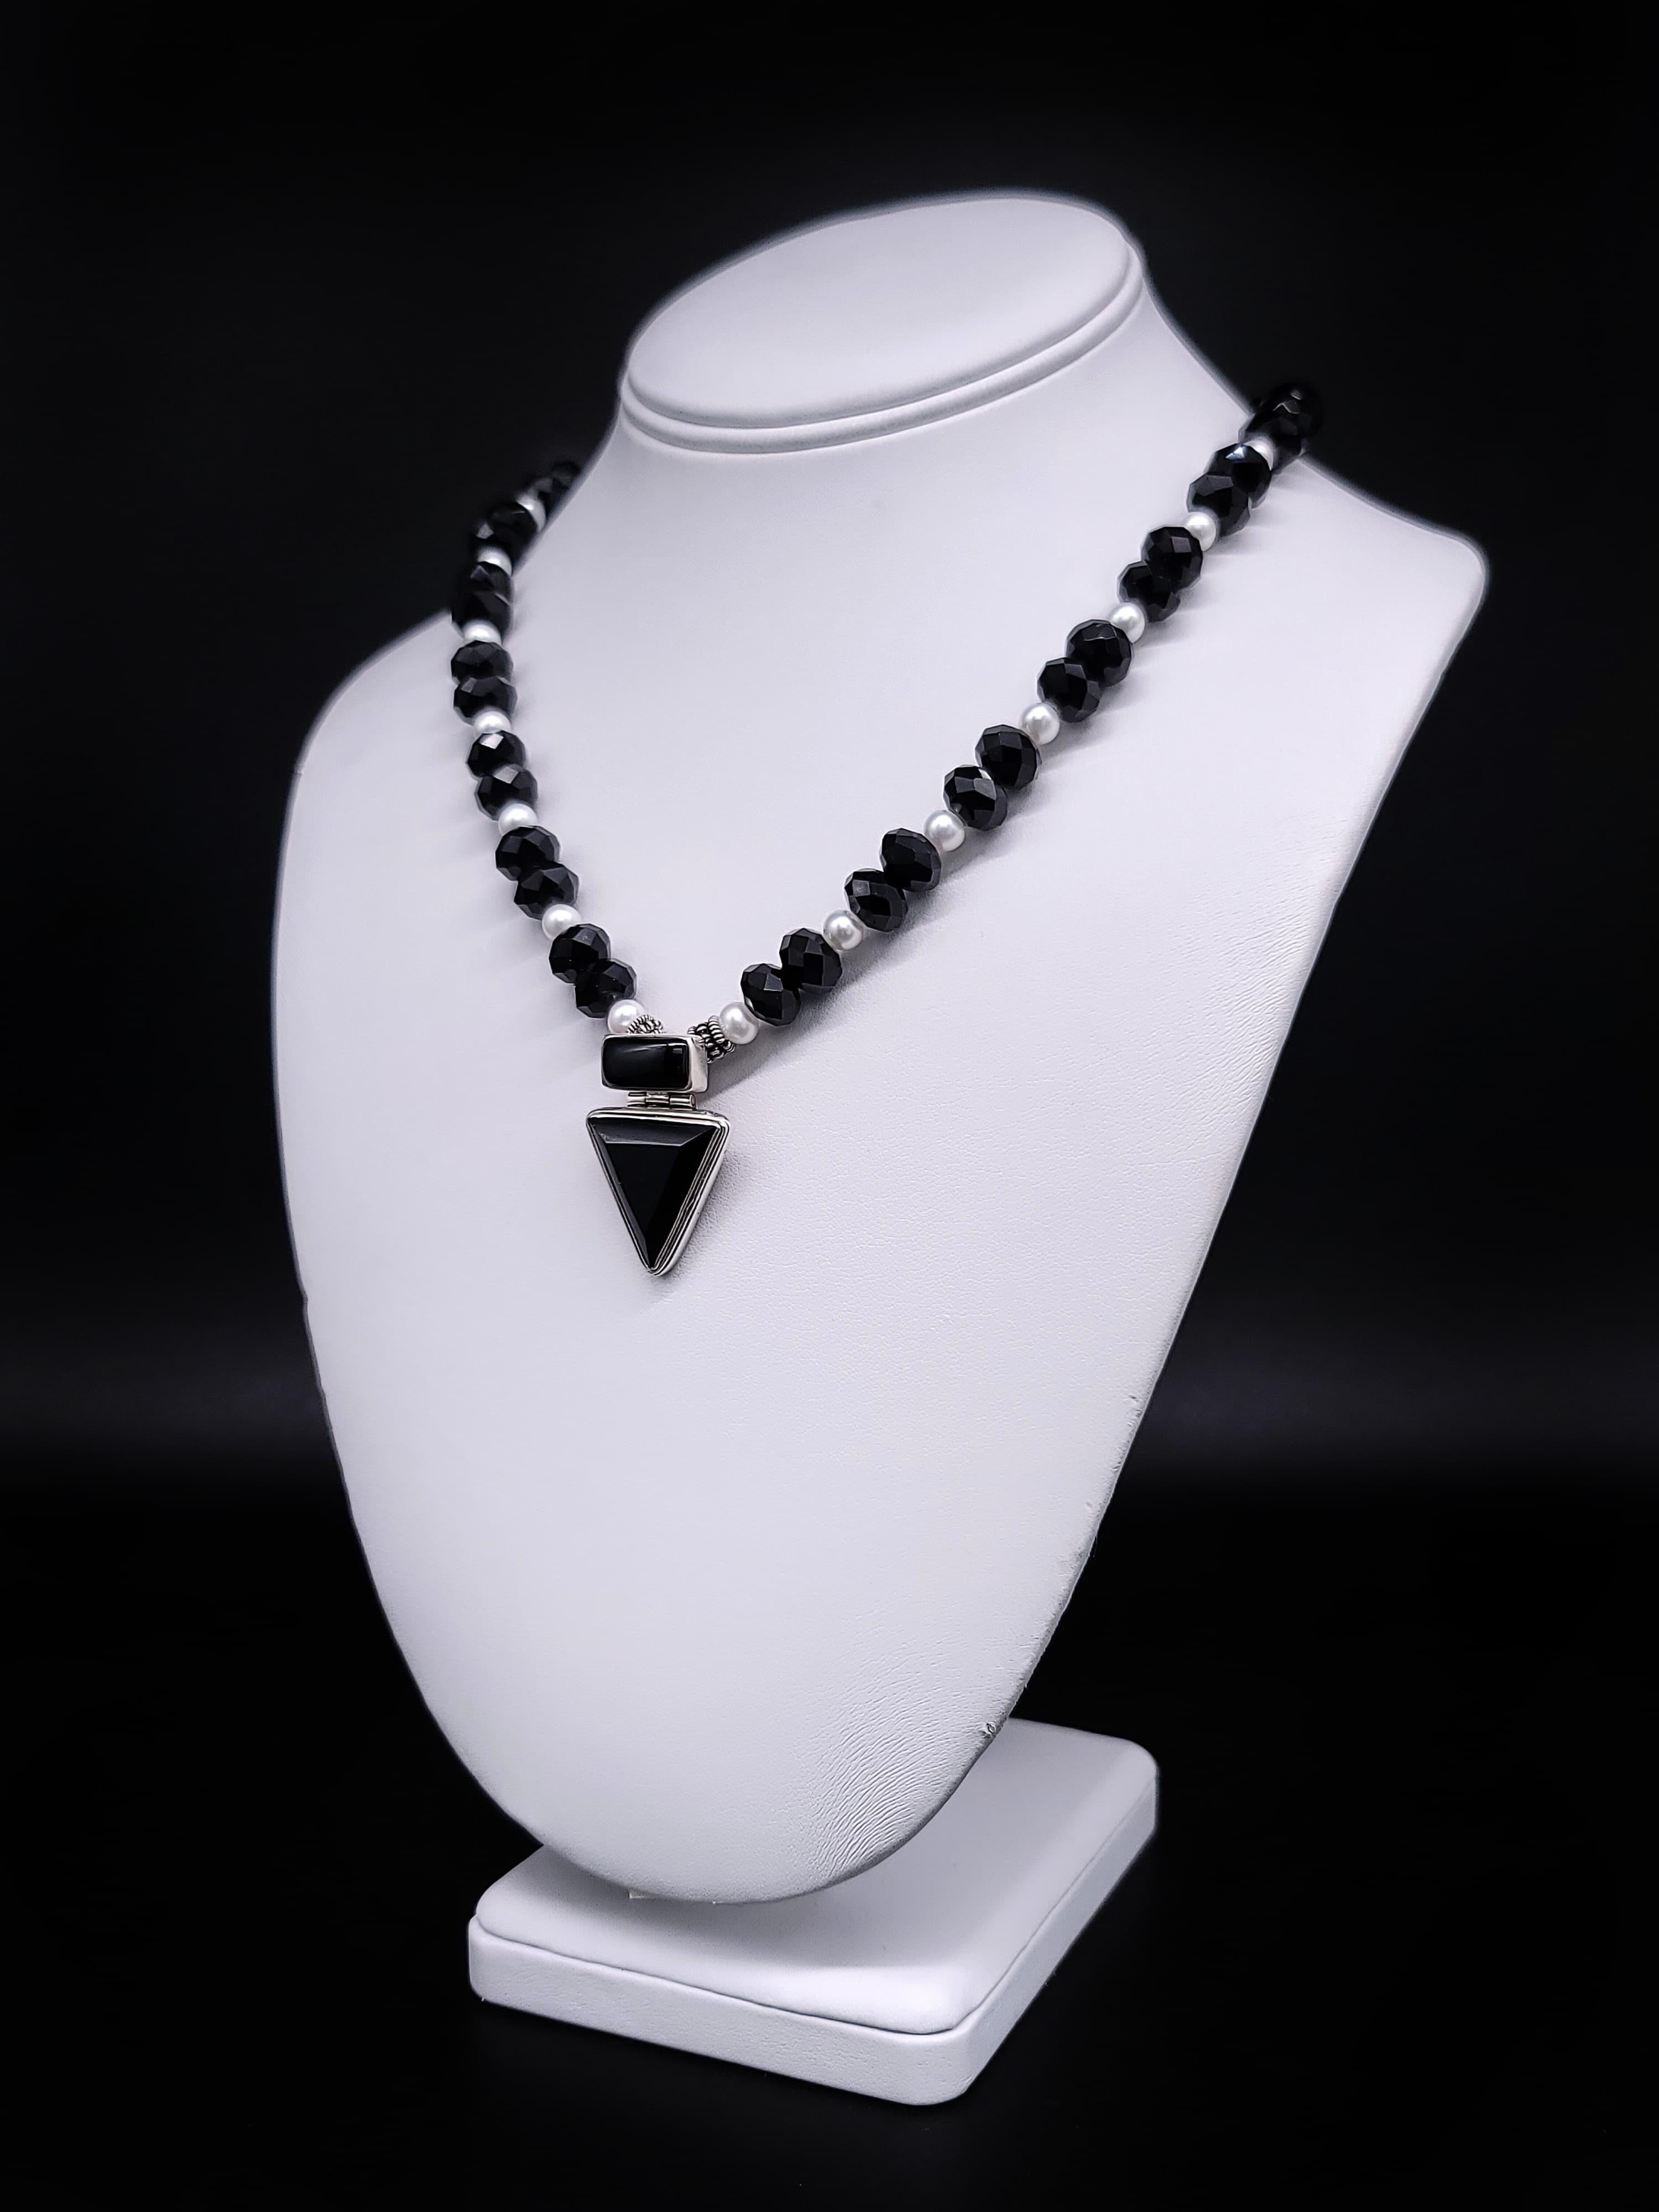 A.Jeschel Versatile and elegant Onyx pendant necklace. 9